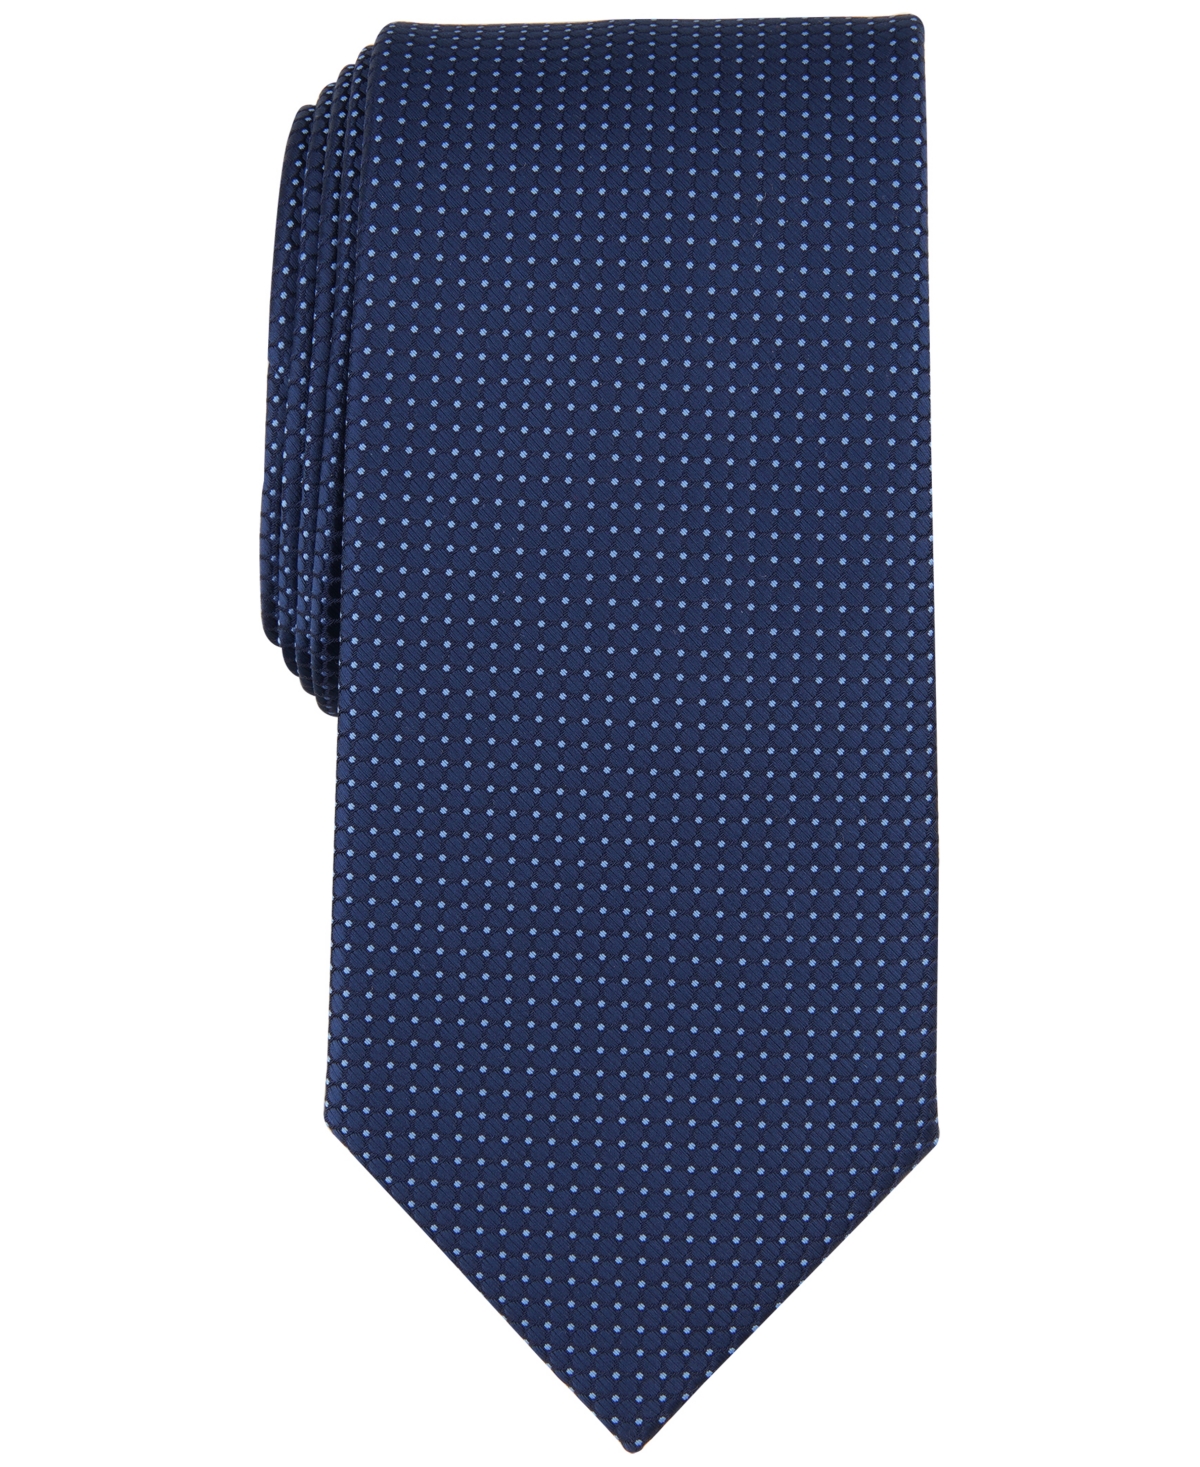 Men's Waydale Solid Textured Tie, Created for Macy's - Navy